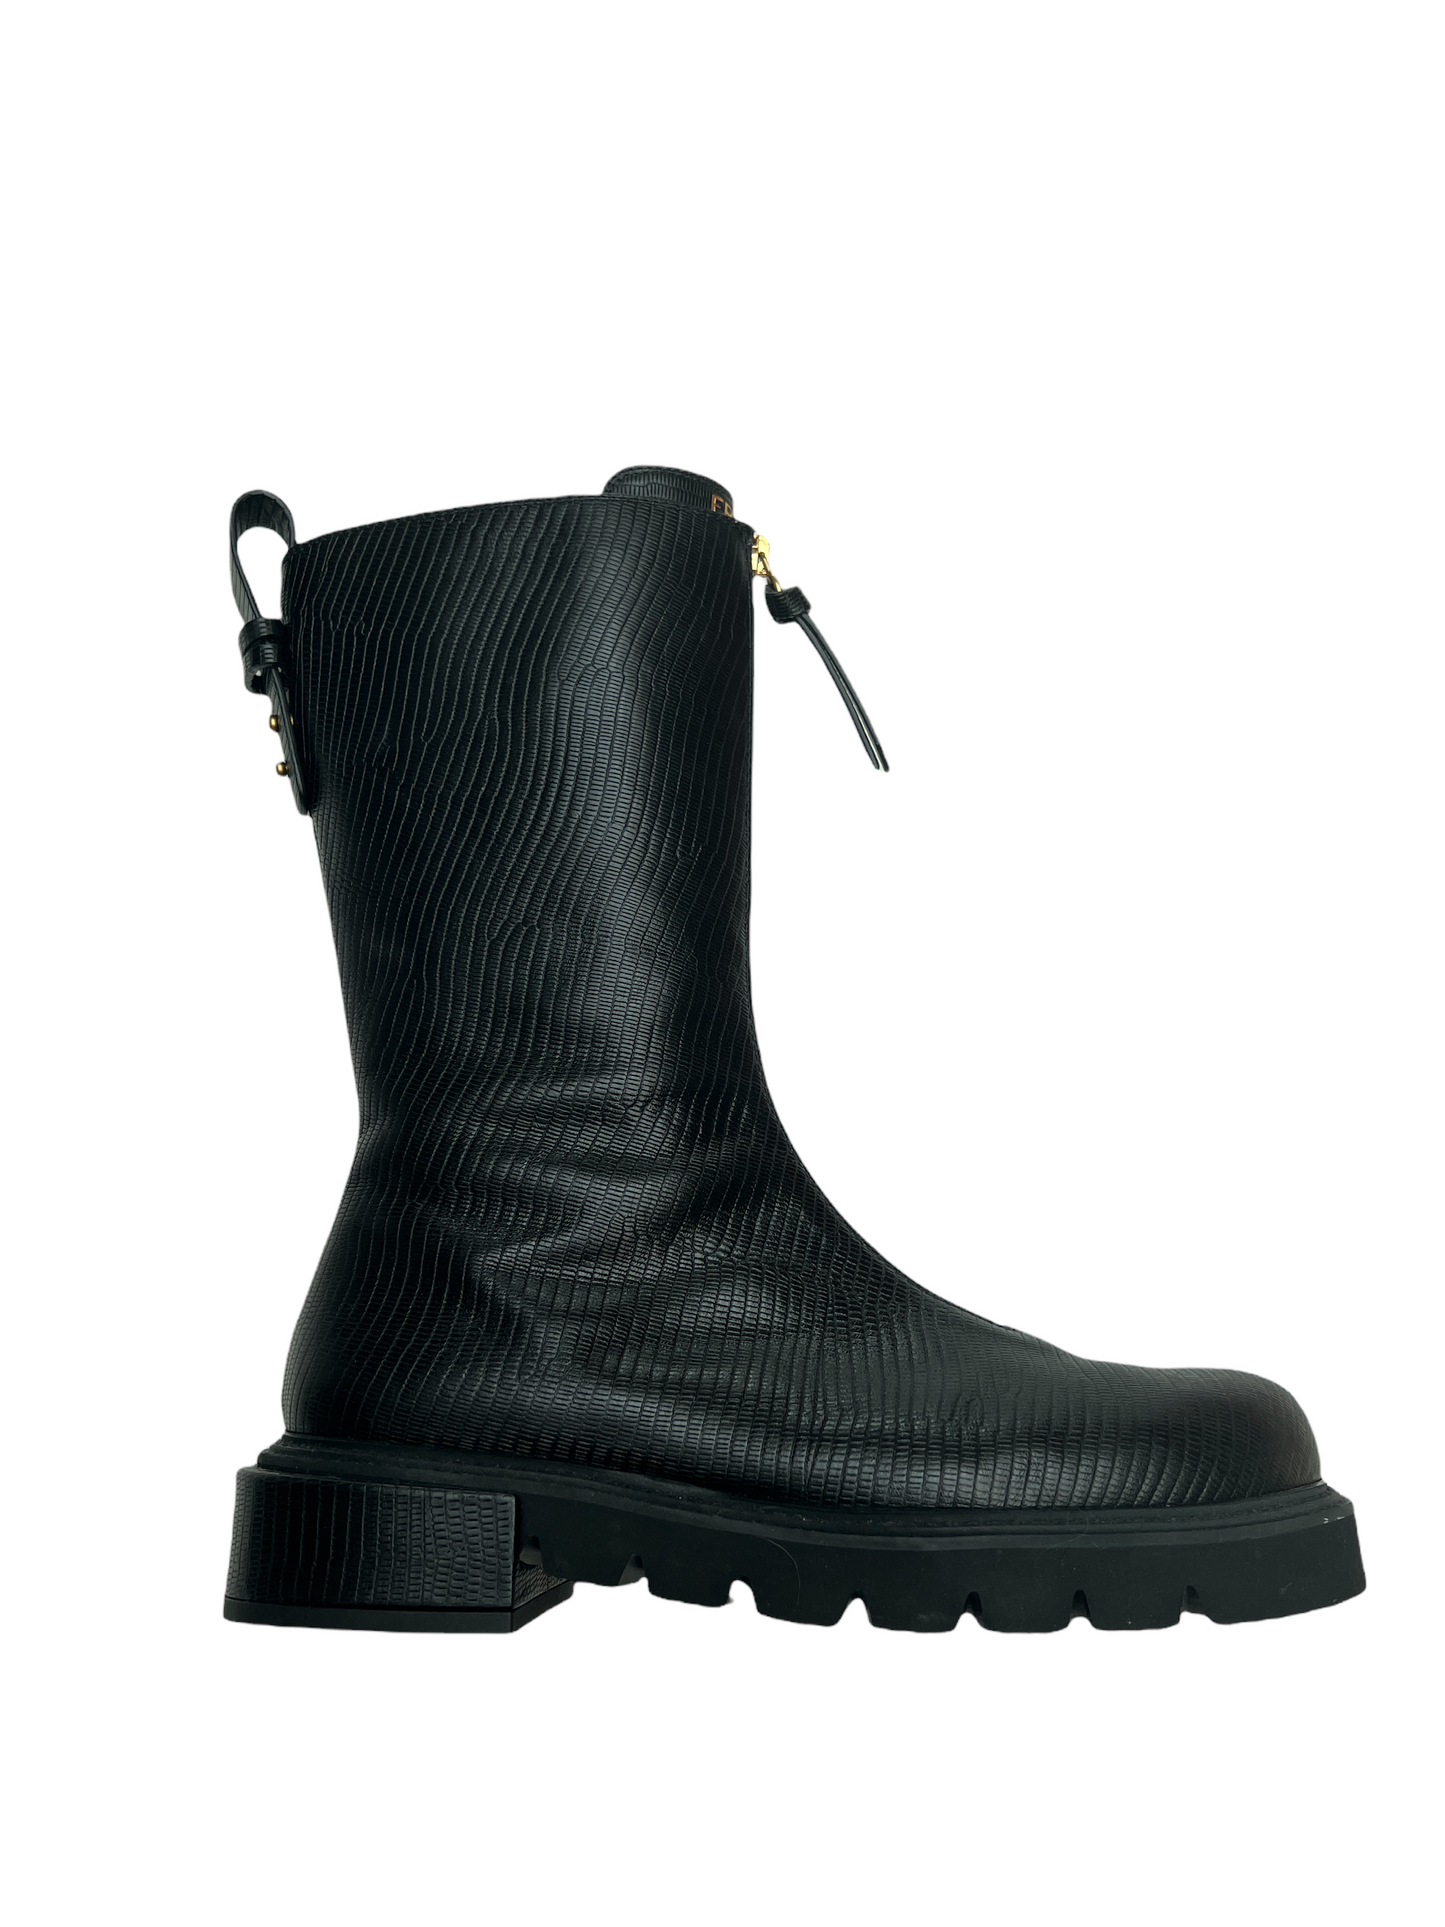 Black Leather Combat Boots - 10